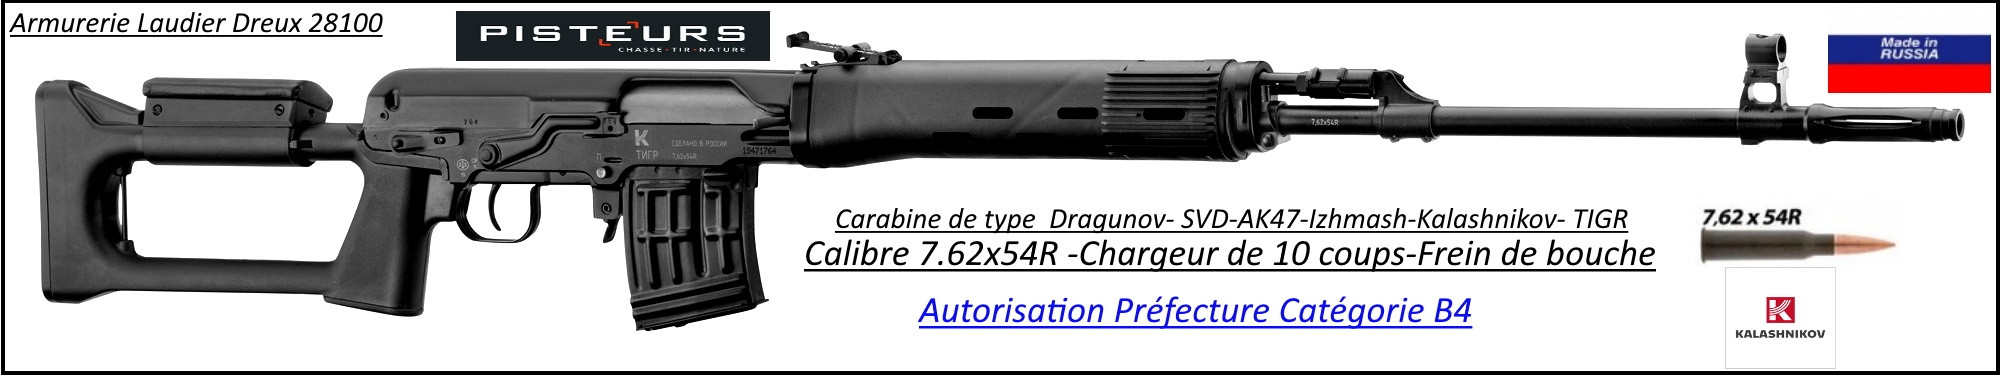 Carabine Izmash Kalashnikov AK47 TIGR SVD Calibre 7.62x54R-semi-automatique canon 620 mm-Type DRAGUNOV-Autorisation-Préfectorale-B4-Ref ZE1230